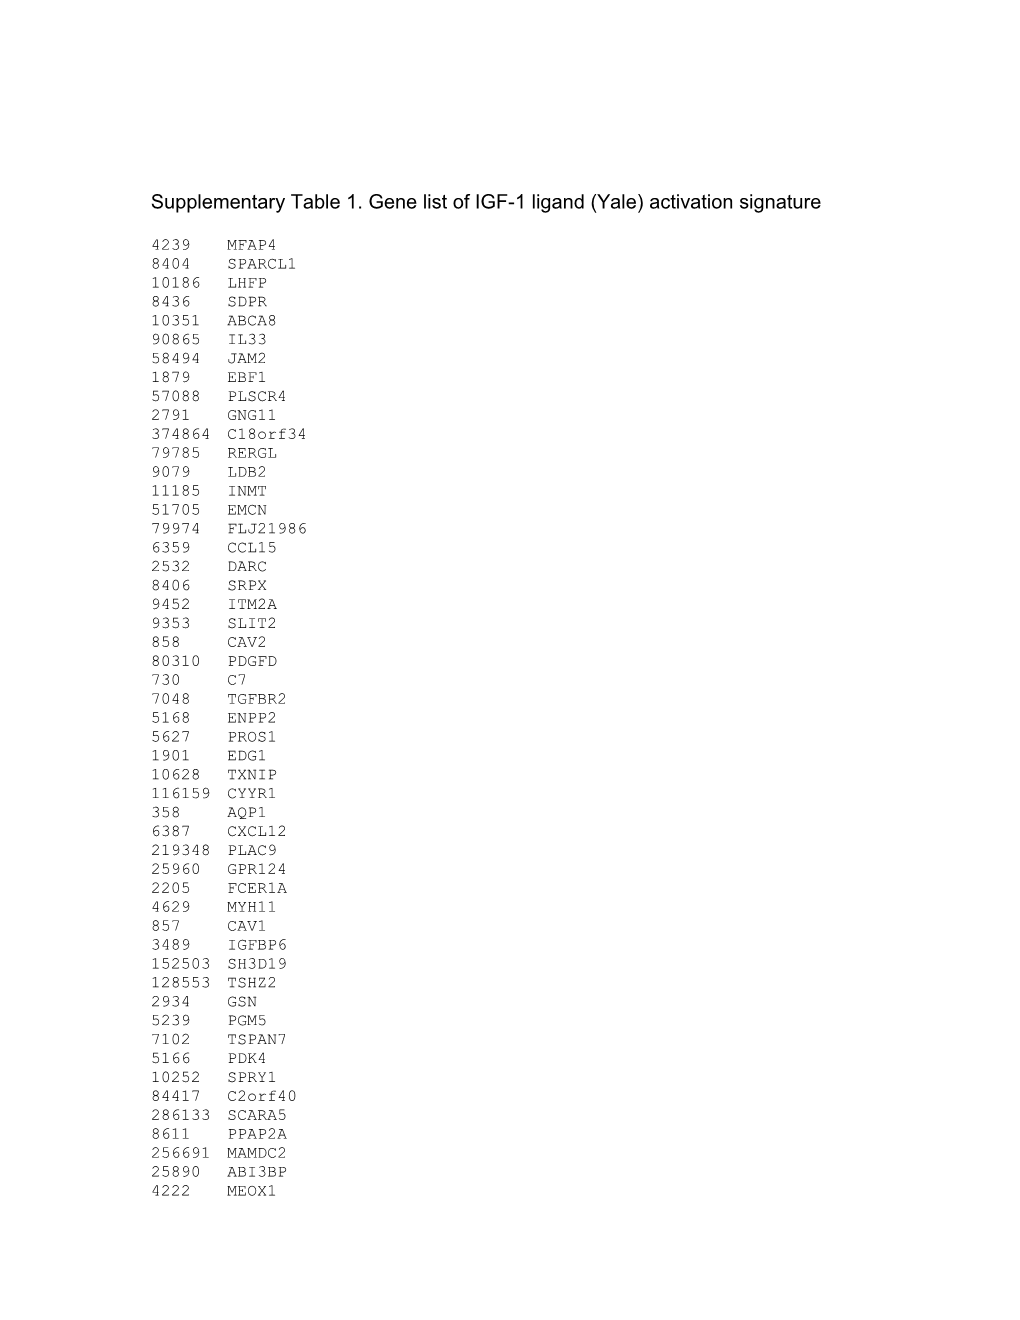 Supplementary Table 1. Gene List of IGF-1 Ligand (Yale) Activation Signature